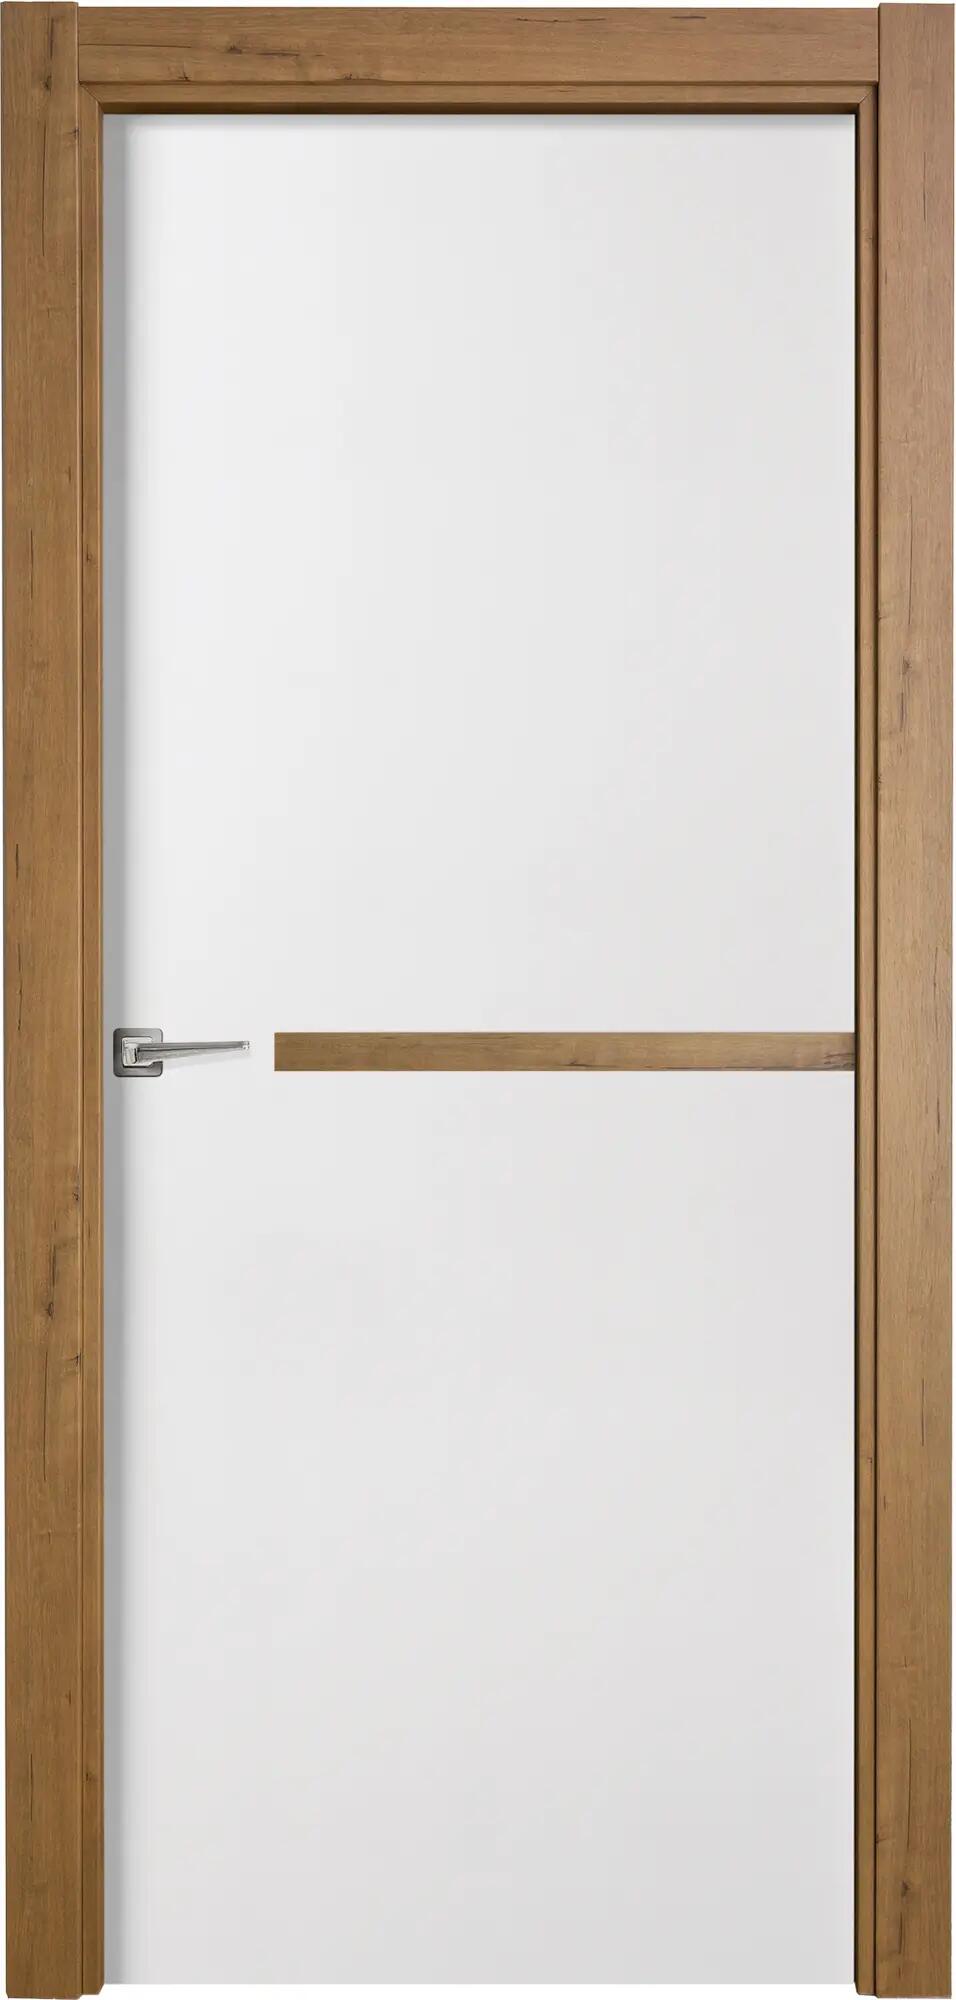 Puerta denver c-gold blanco apertura derecha de 9x62,5cm